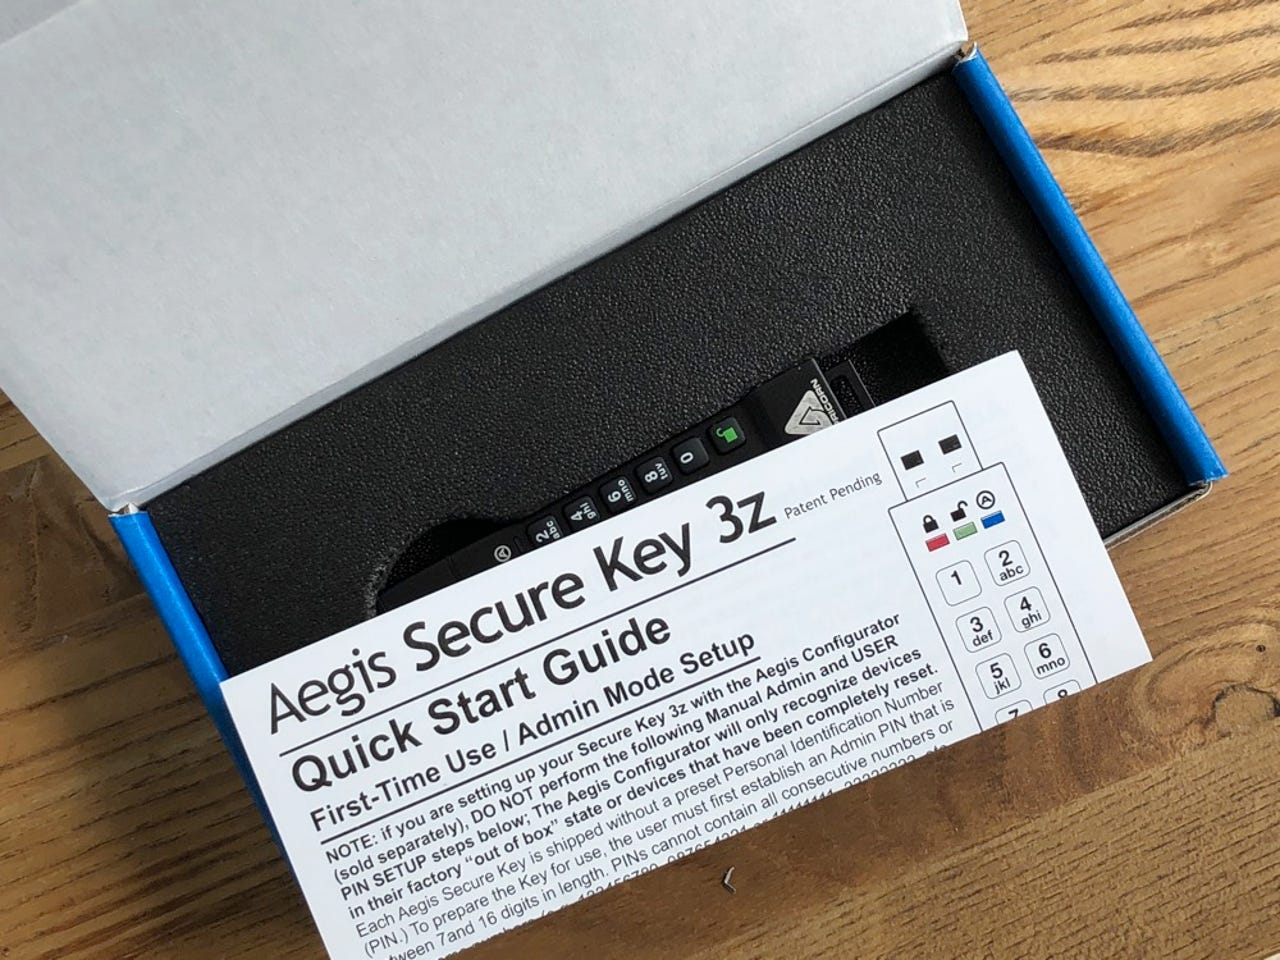 Aegis Secure Key 3z